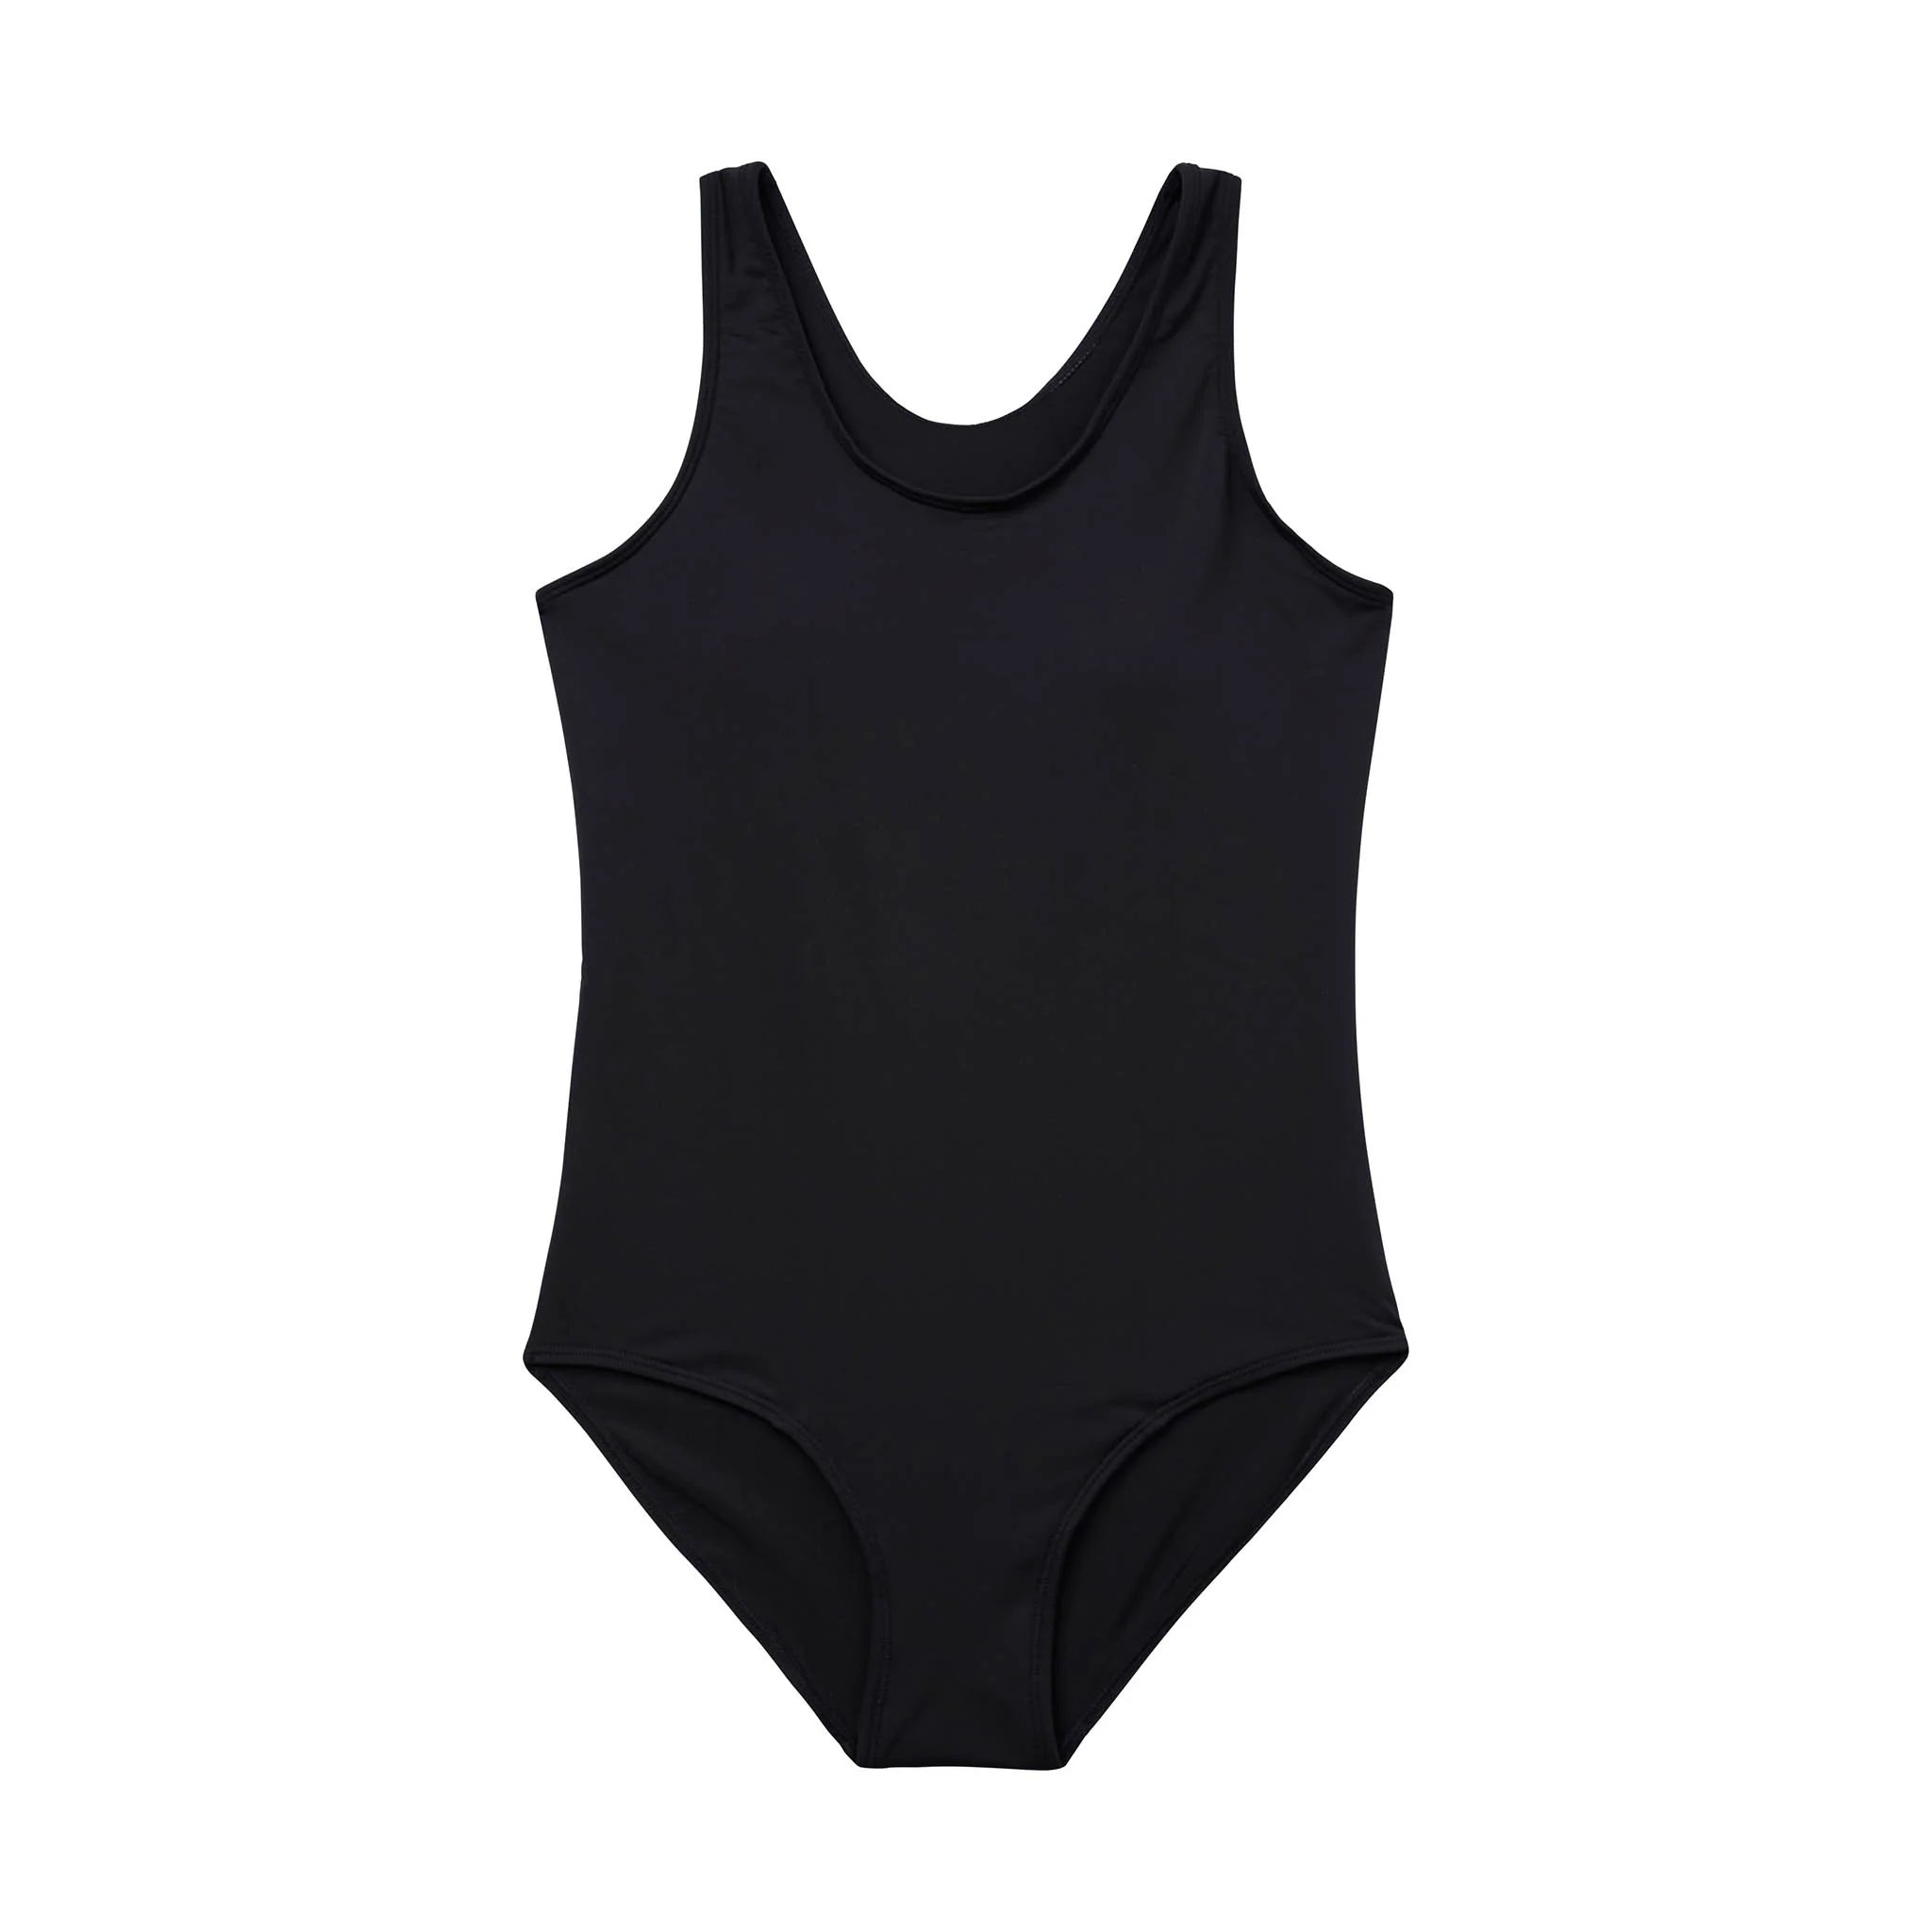 Modibodi period-proof swimwear and pee-proof swimwear is designed